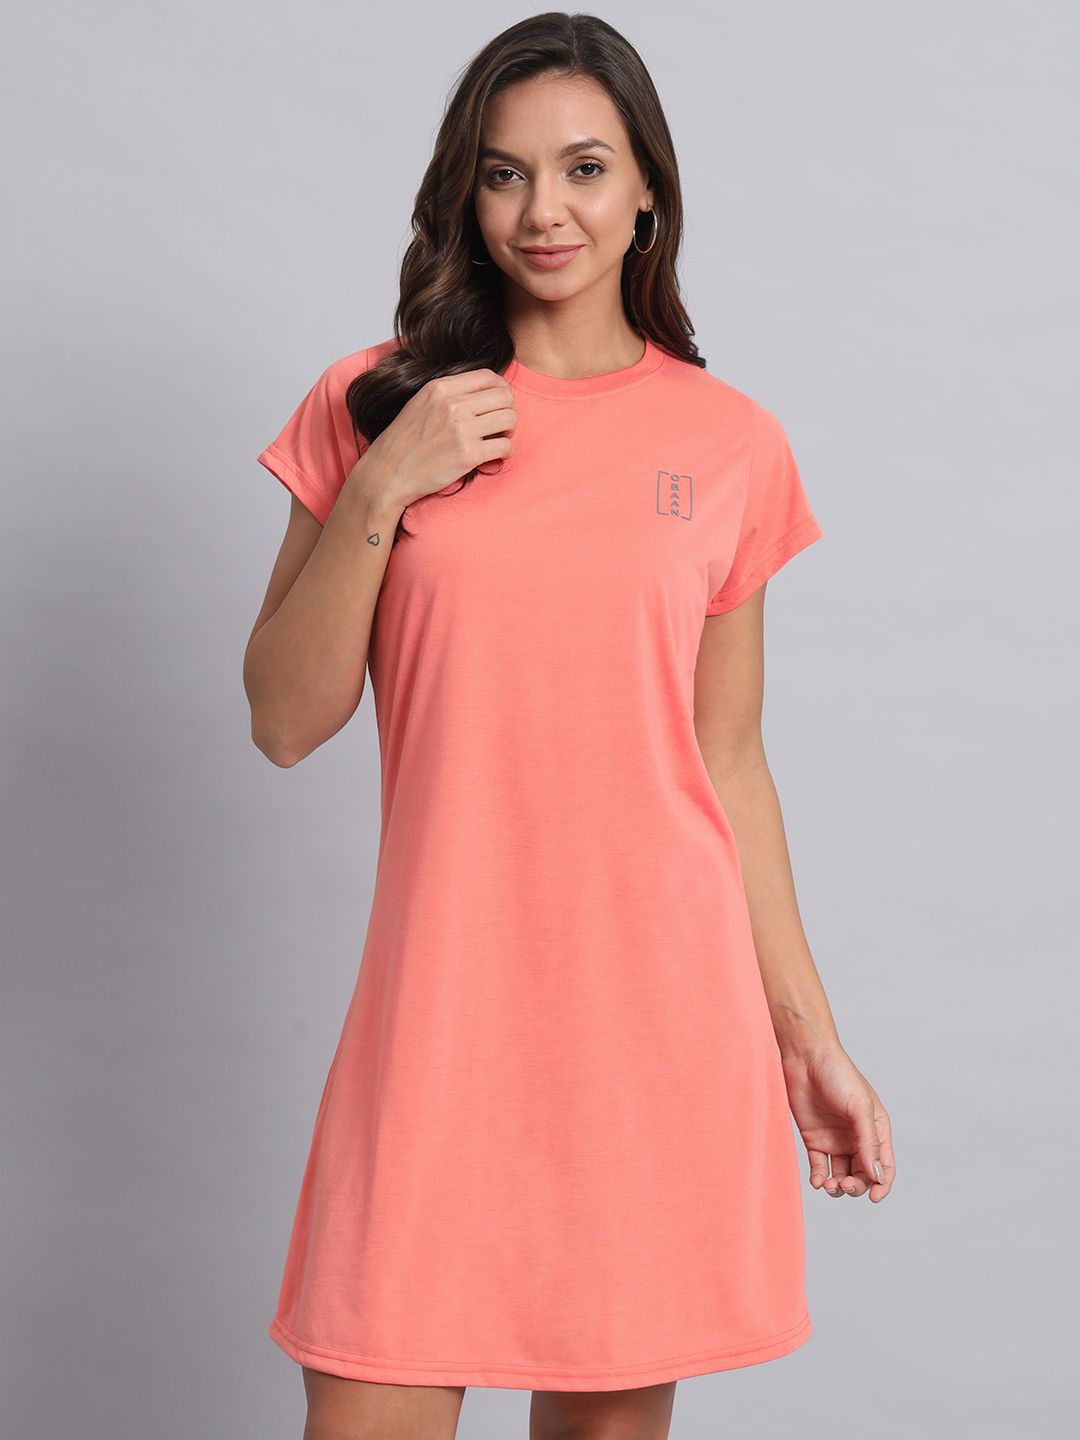     			OBAAN Cotton Blend Solid Above Knee Women's T-shirt Dress - Peach ( Pack of 1 )